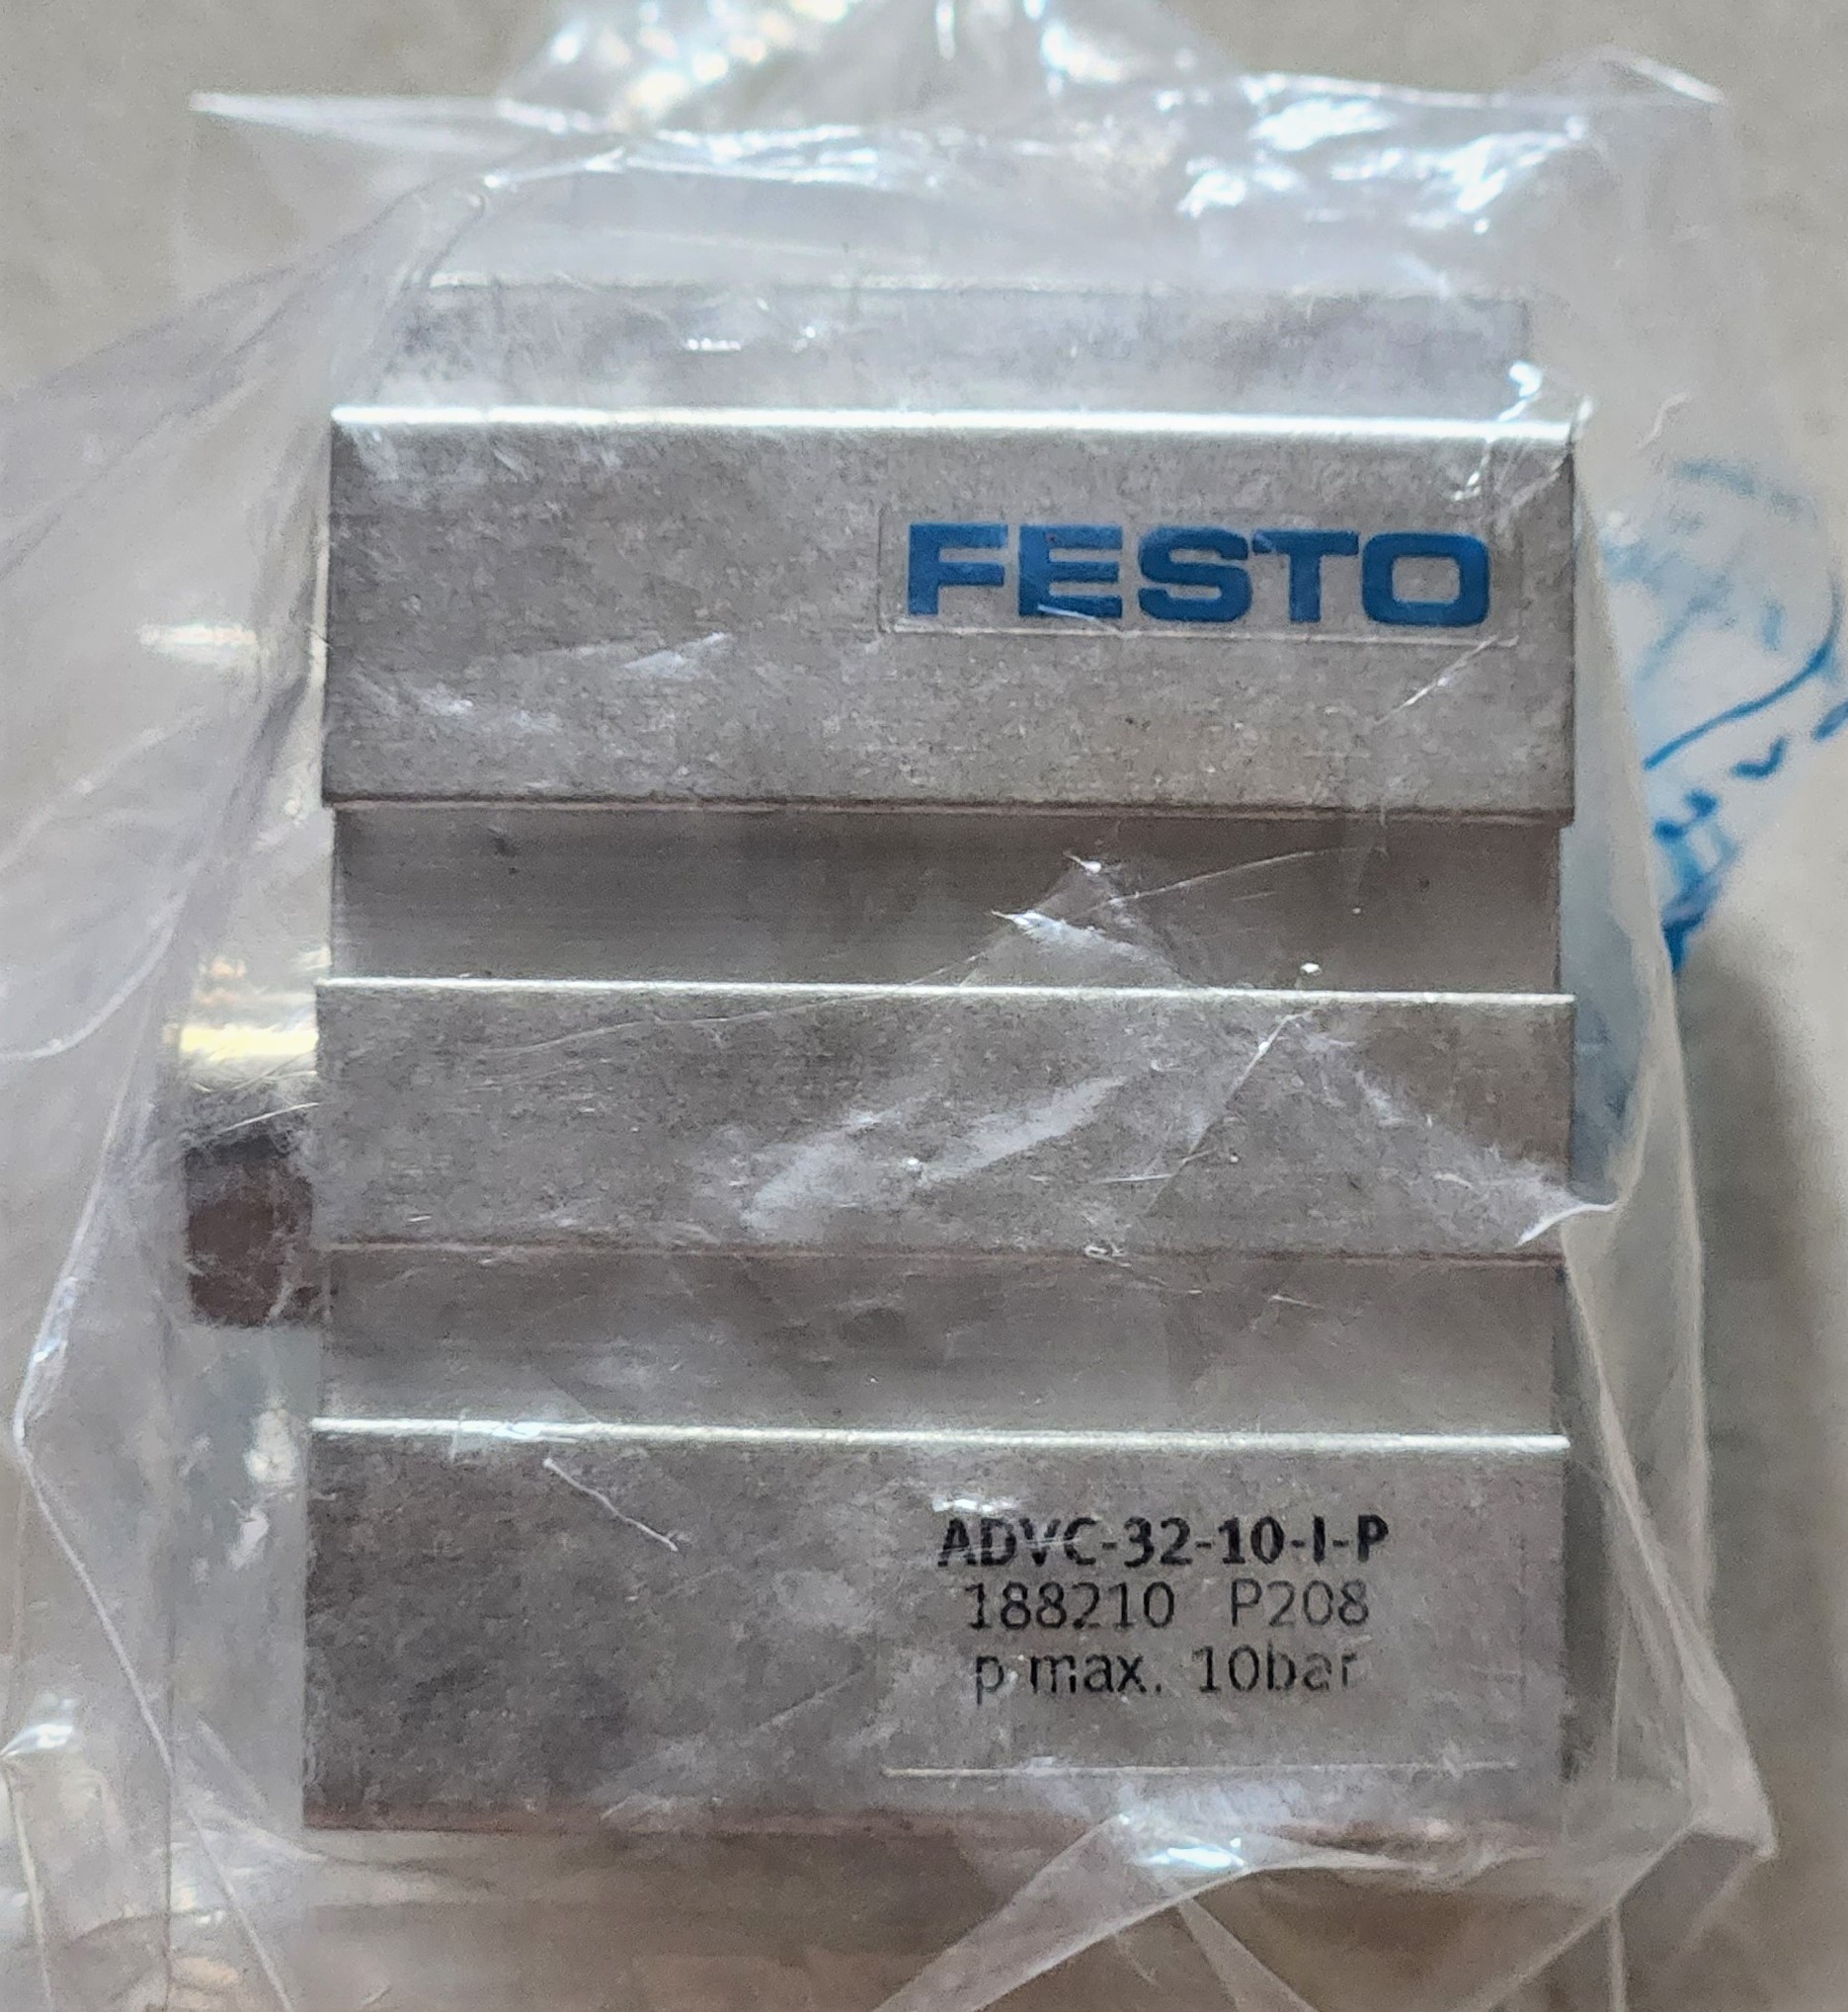 ADVC-32-10-I-P (Festo) – 1